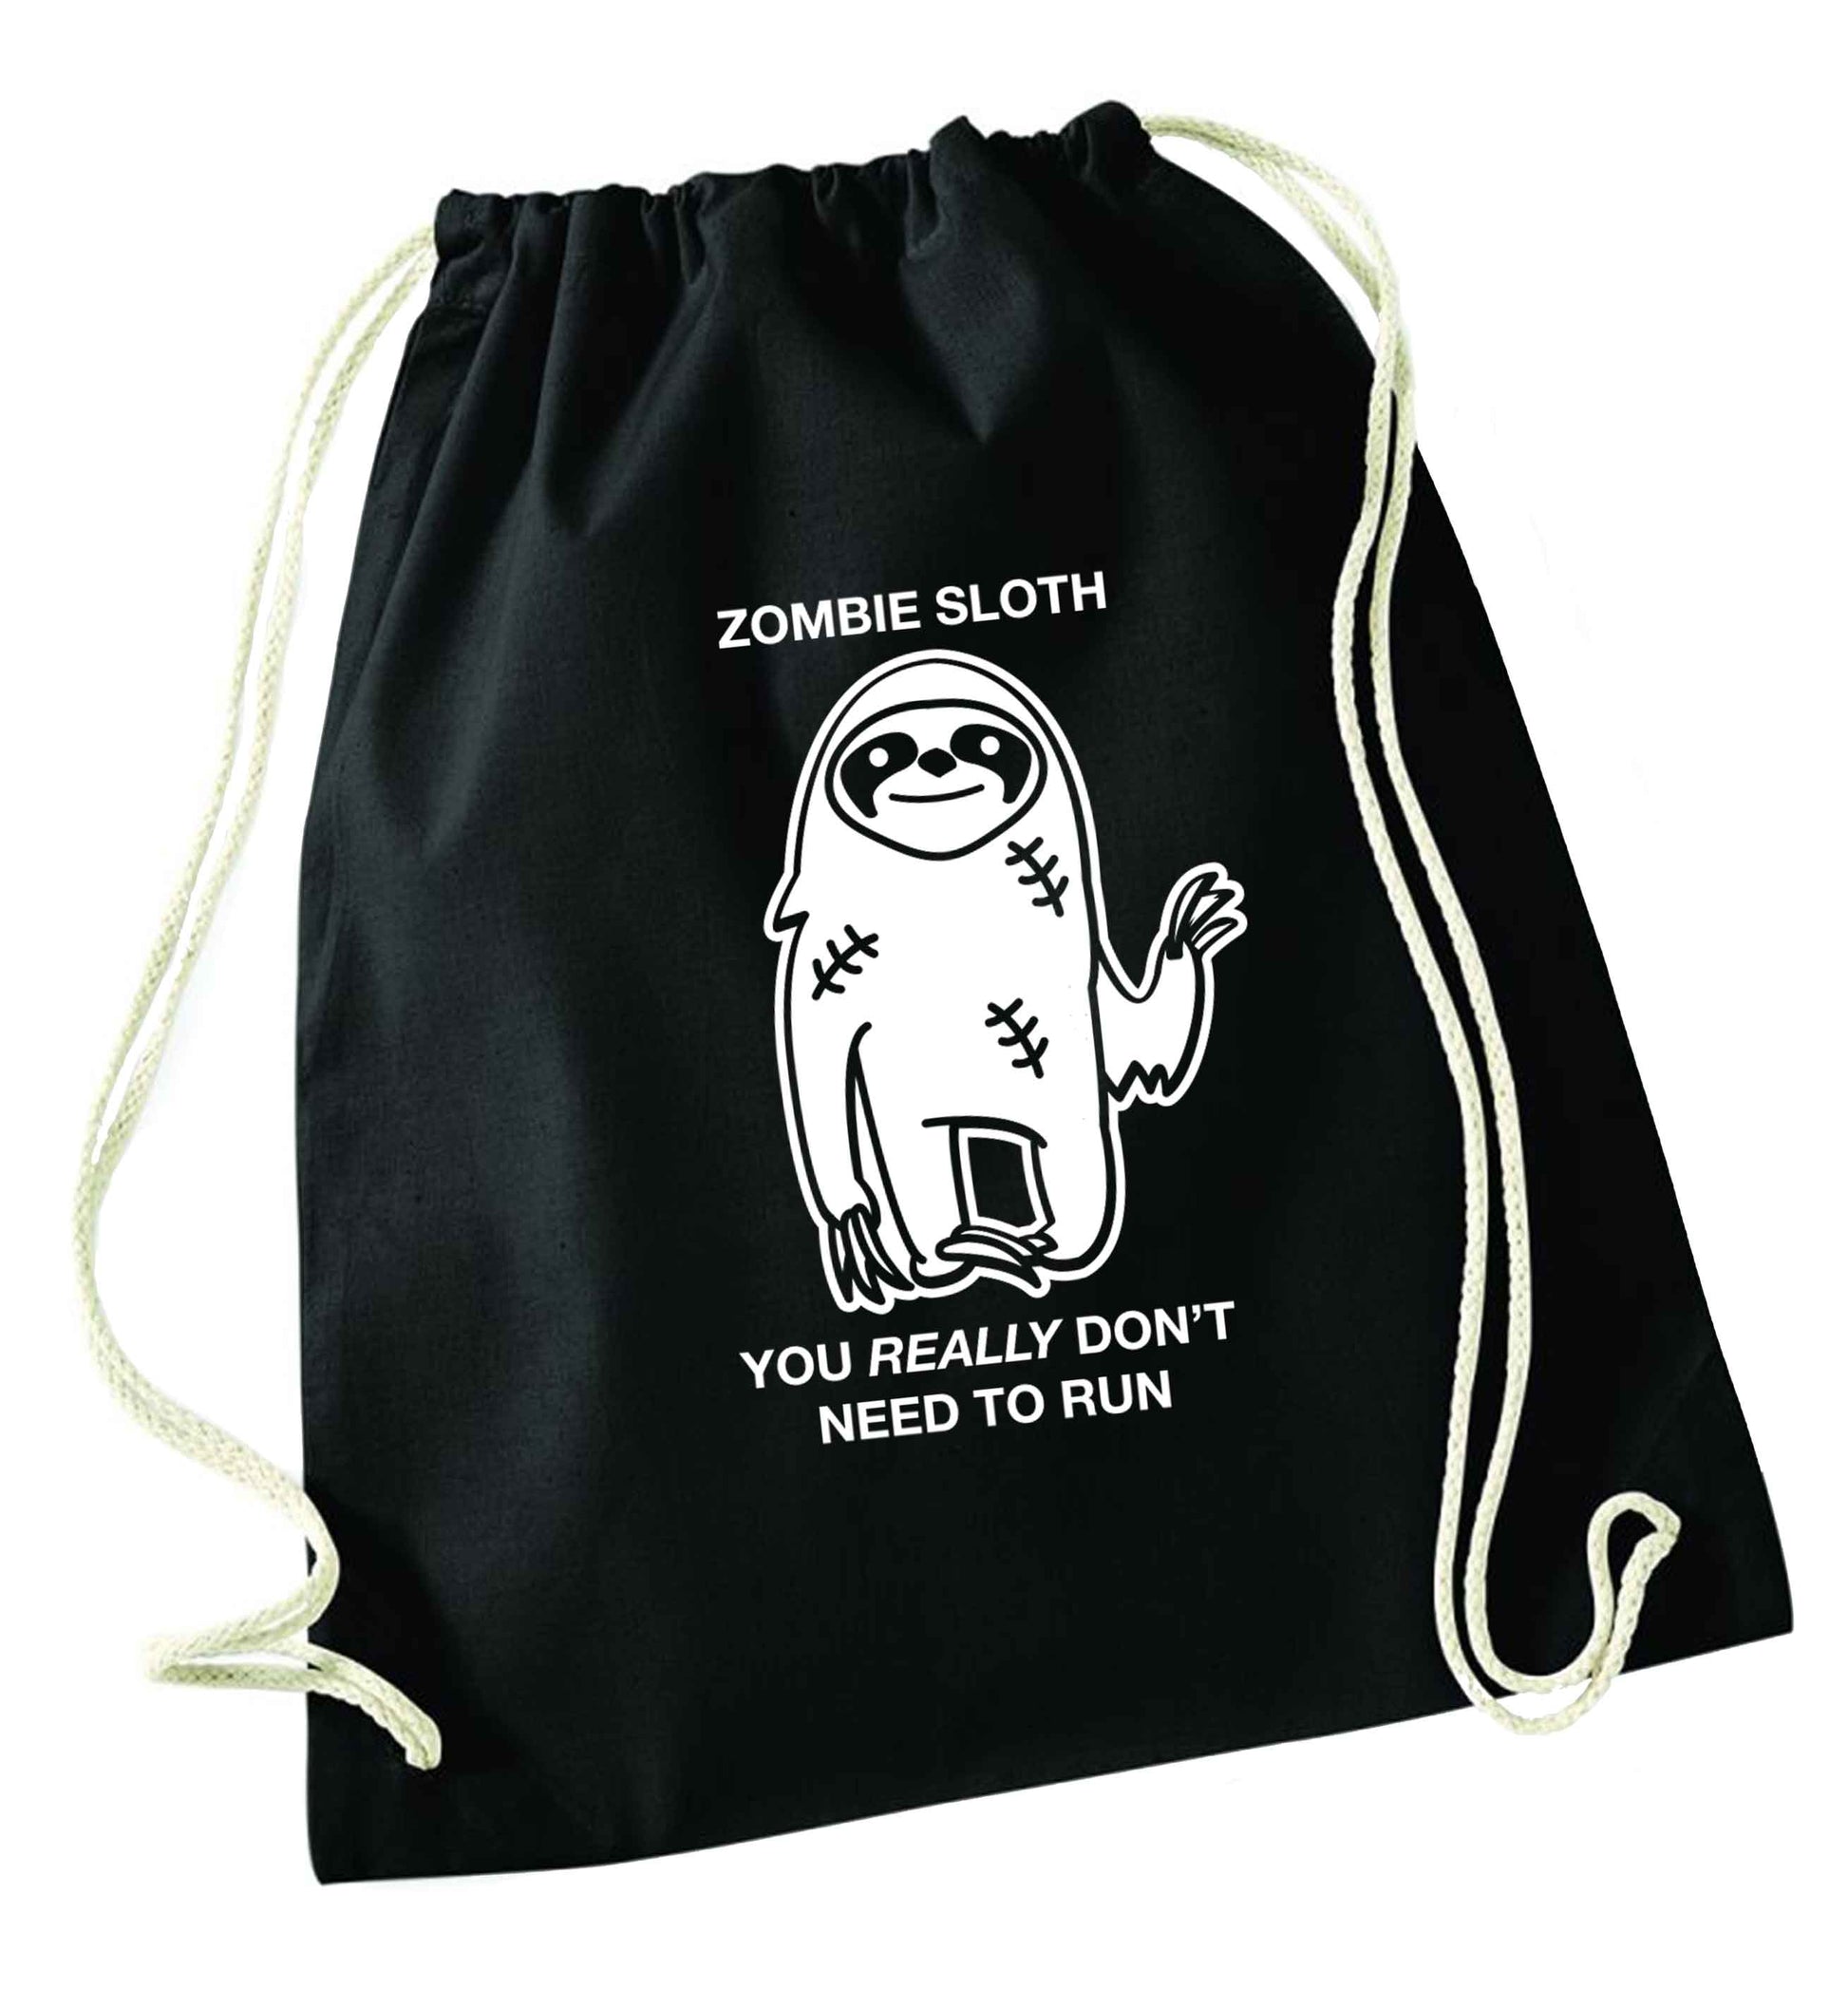 Zombie sloth you really don't need to run black drawstring bag